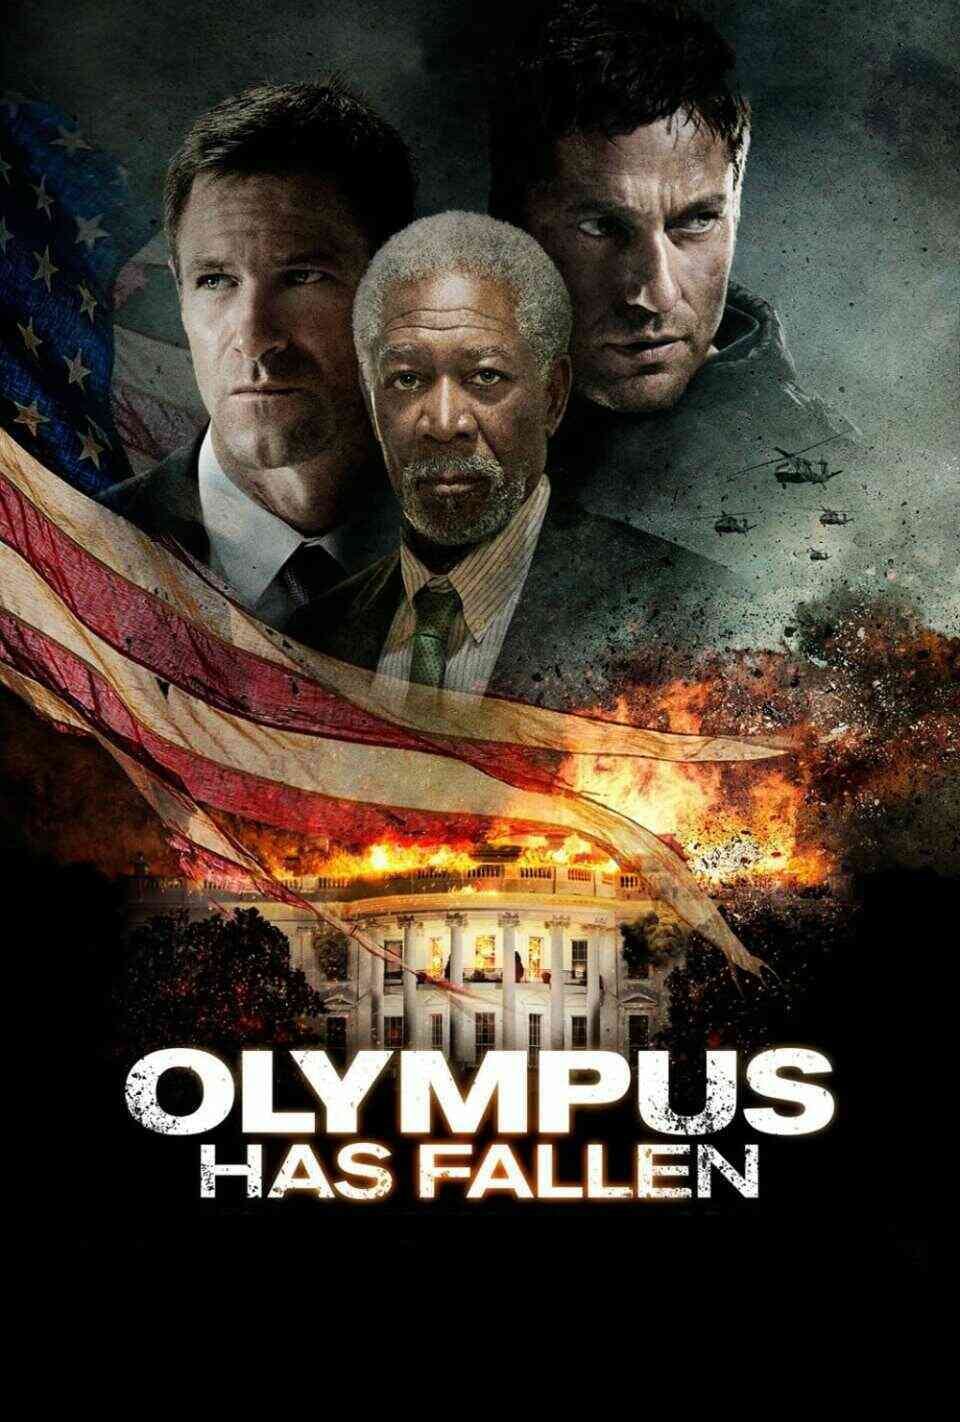 Read Olympus Has Fallen screenplay (poster)